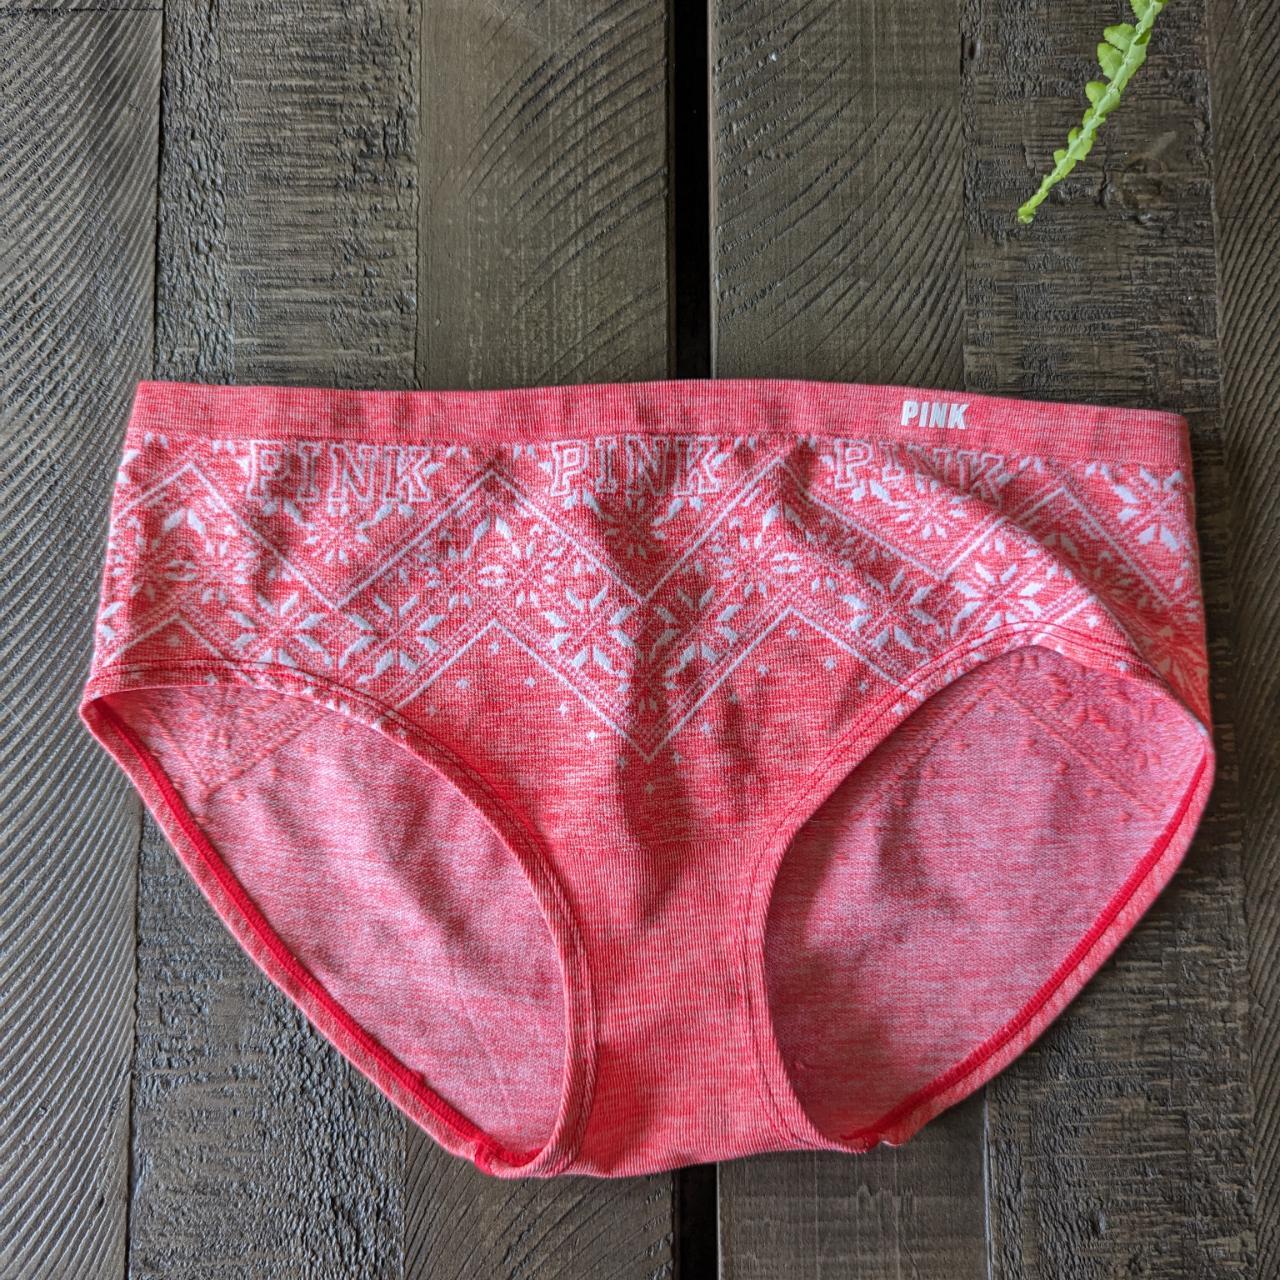 NWOT Pink Victoria's Secret Panty